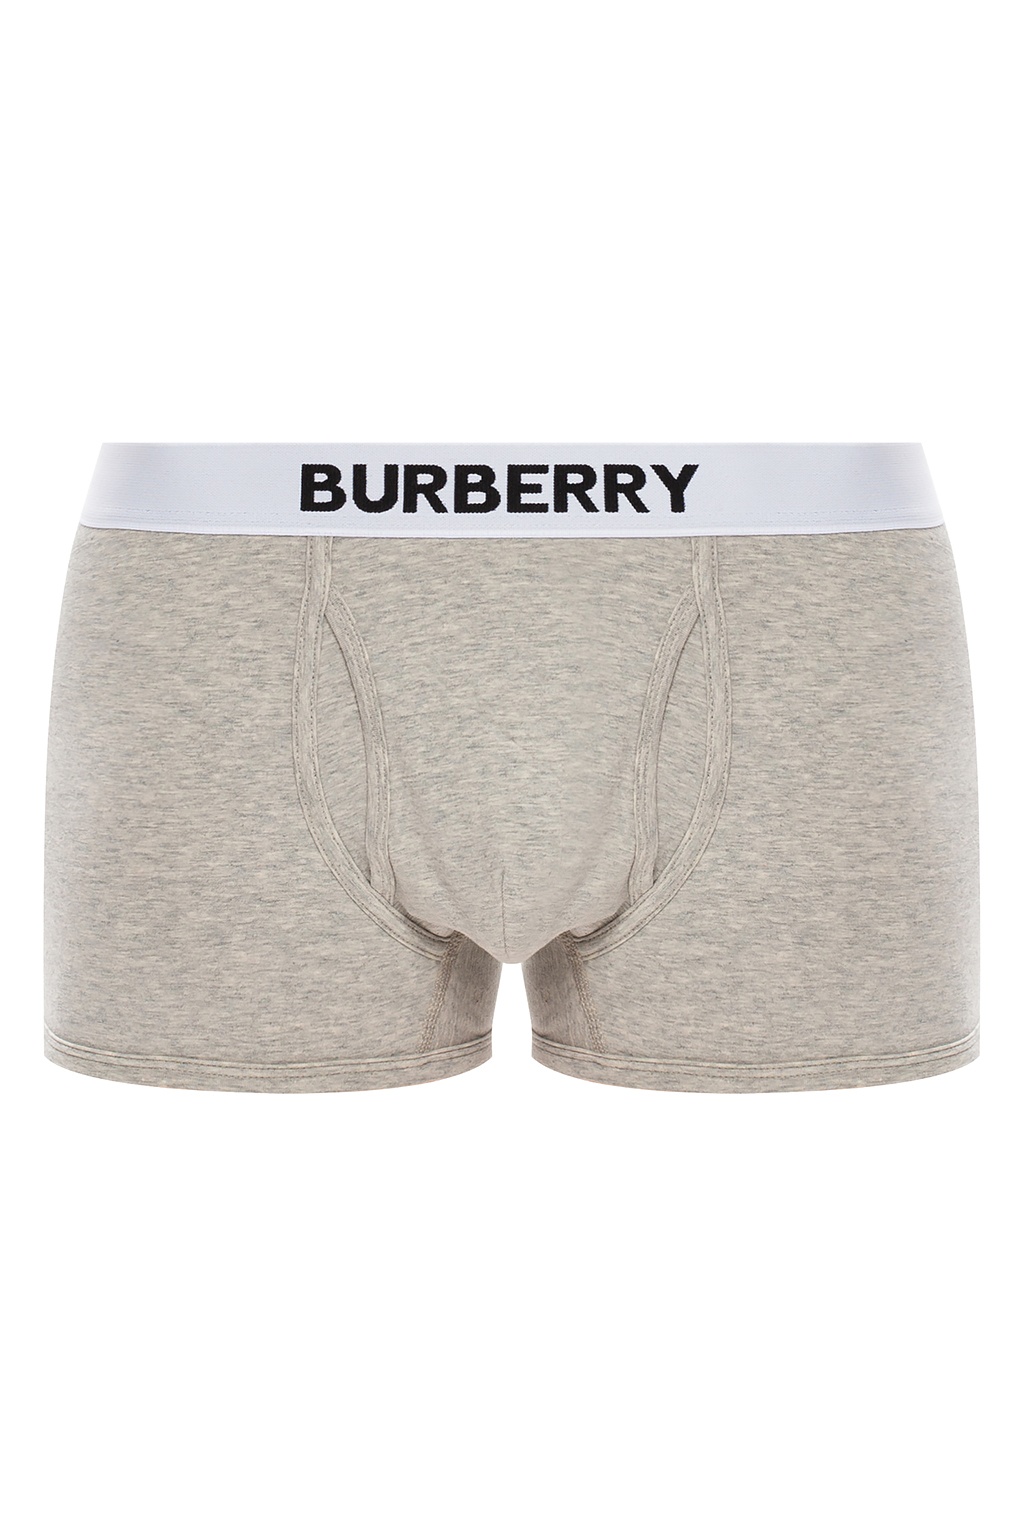 NEW! Burberry men's underwear - Trunk / Boxer (fit M)